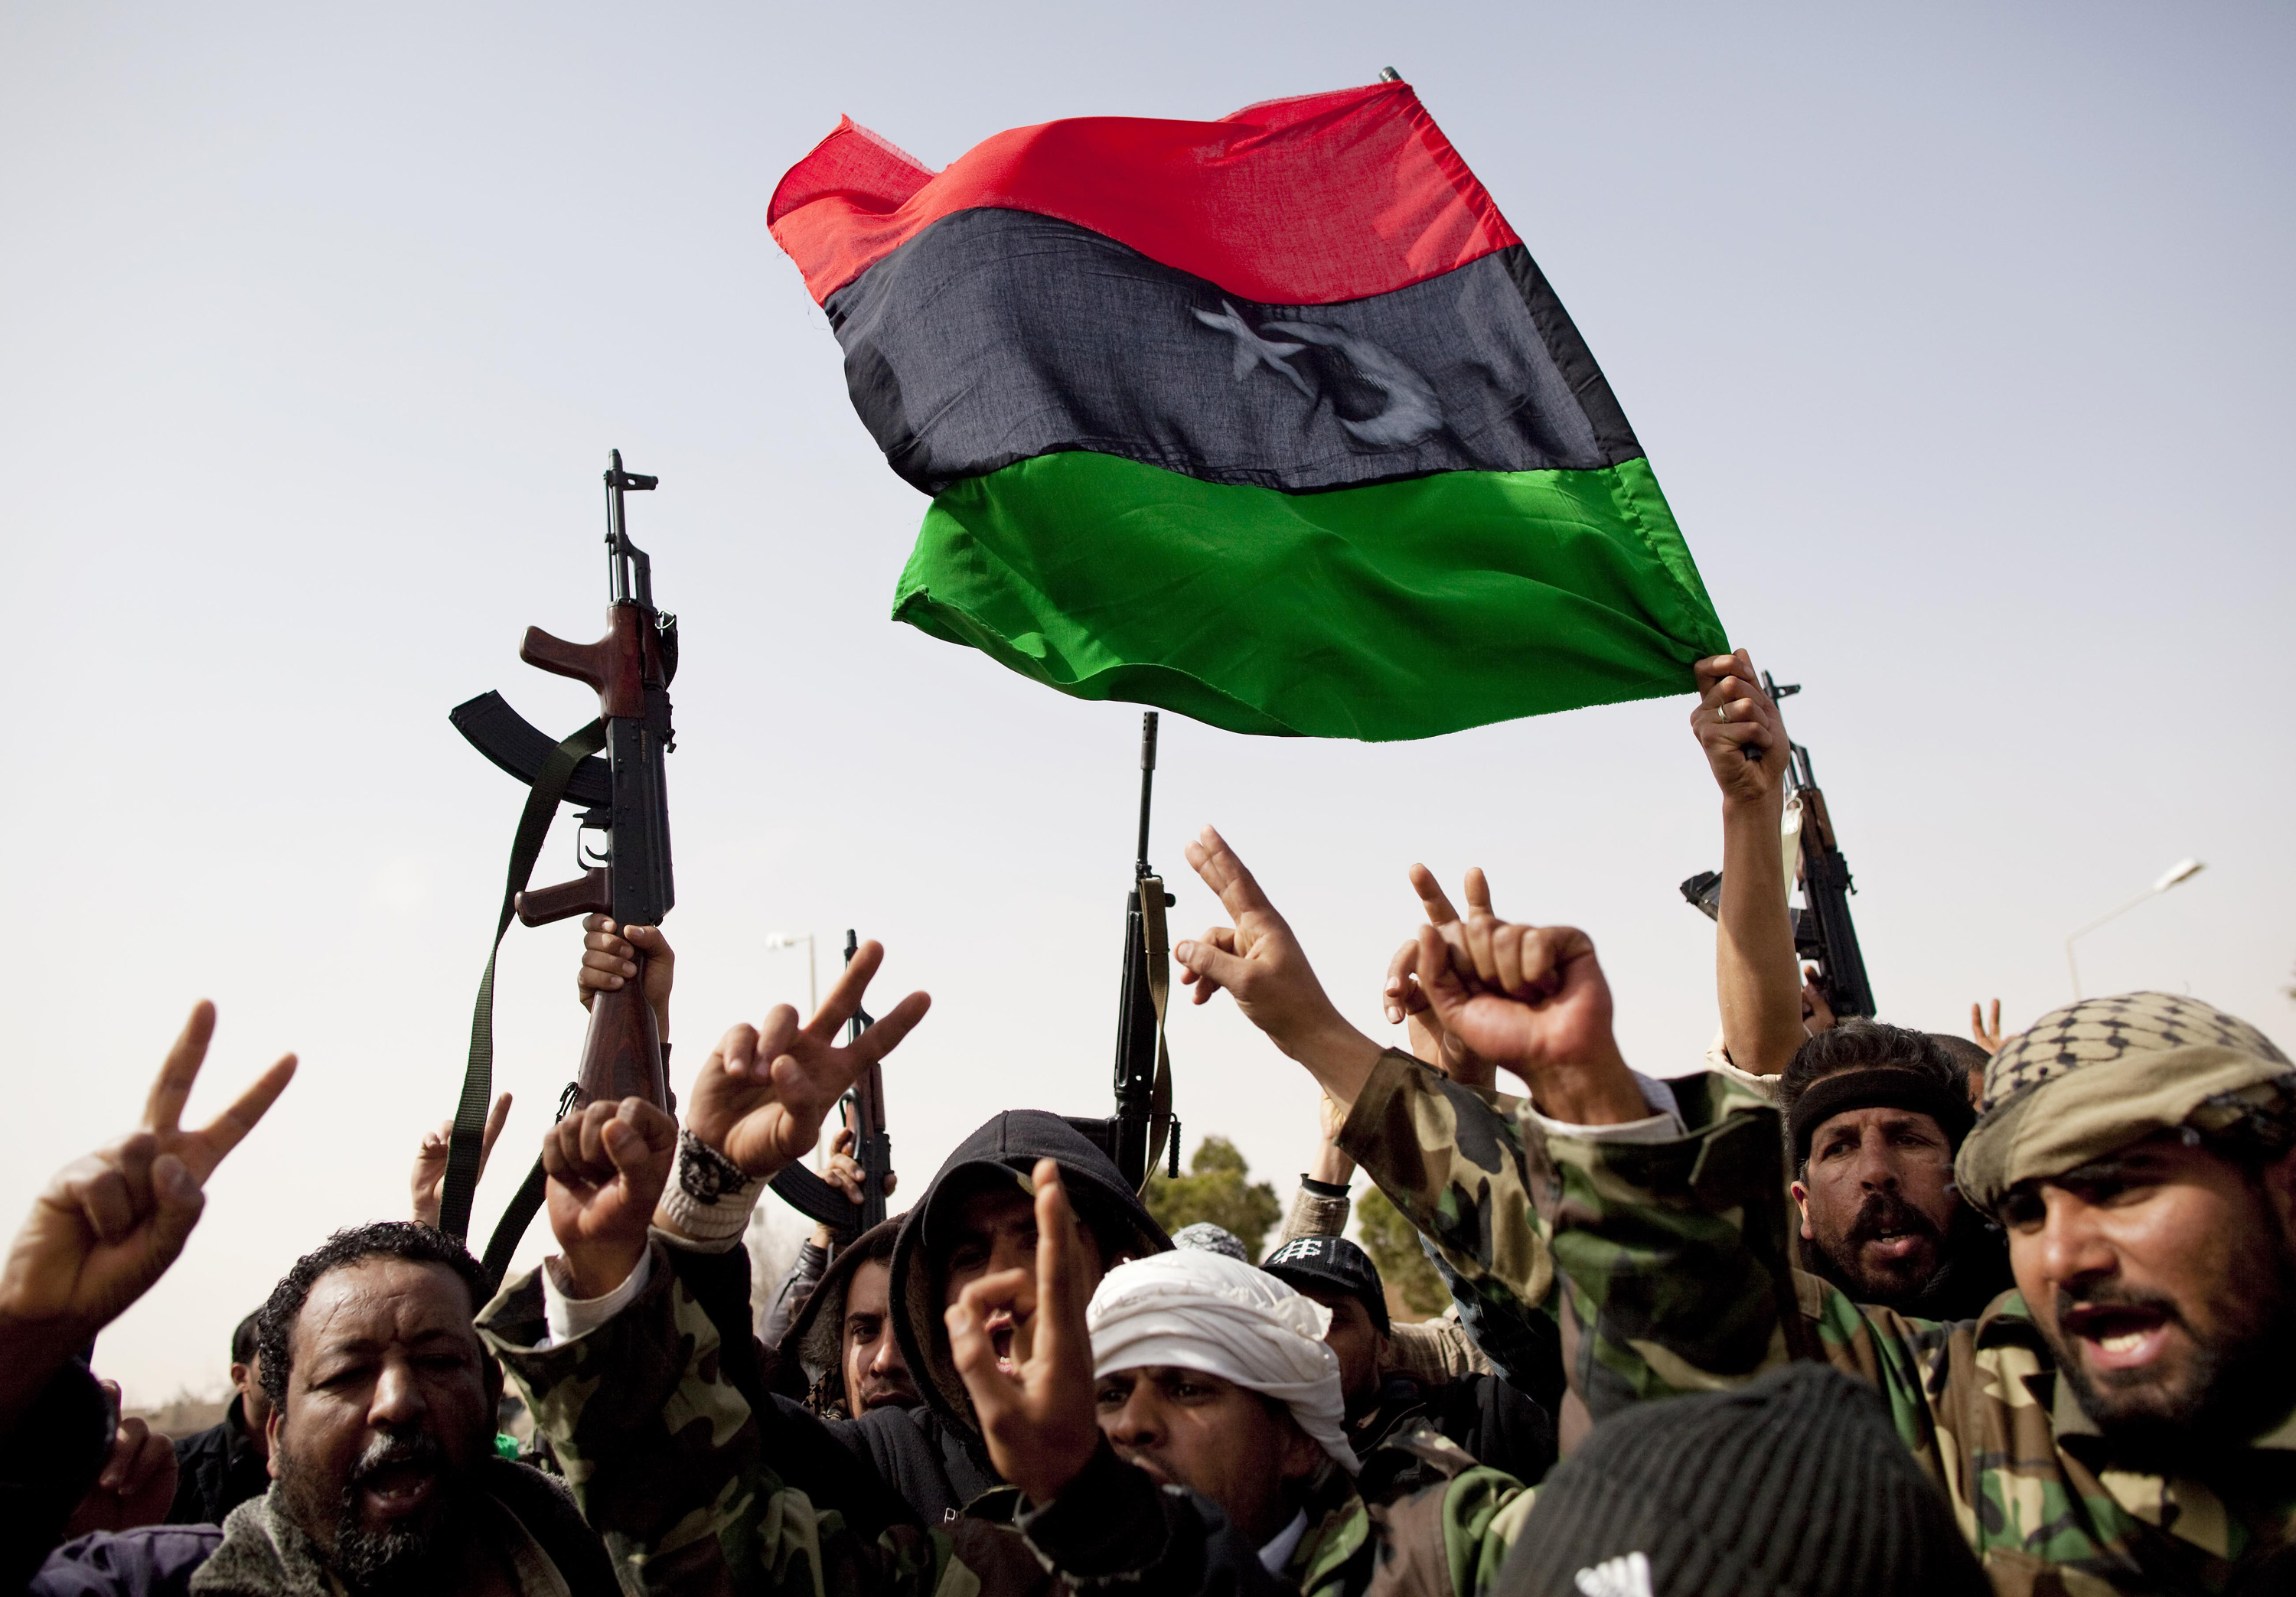 Kaos, Militar, Uppror, Krig, Armé, Demonstration, Libyen, Strider, Blodbad